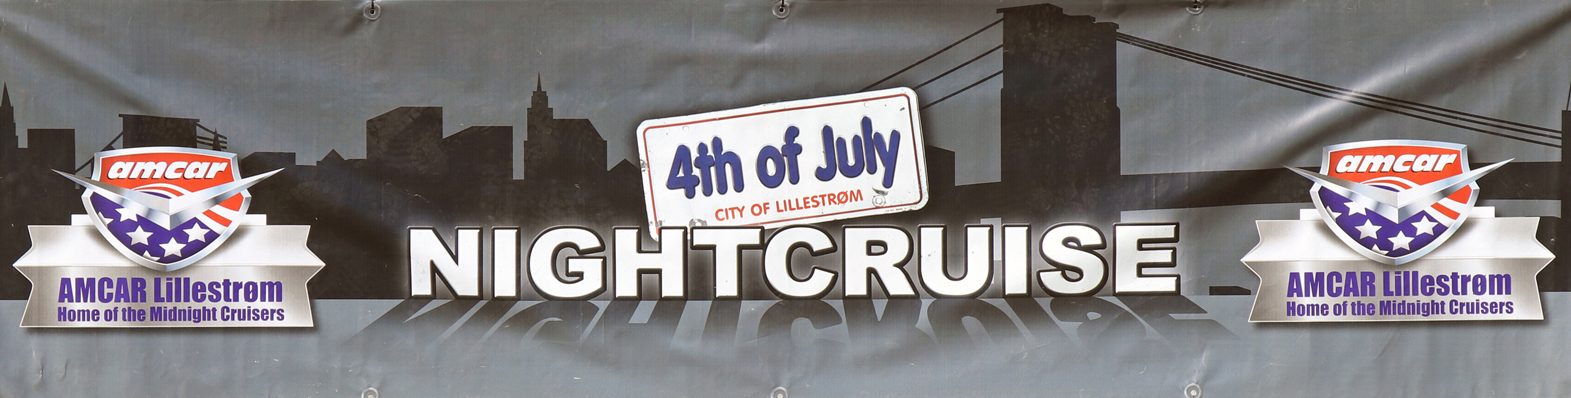 35th anniversary - 4th of July Night Cruise